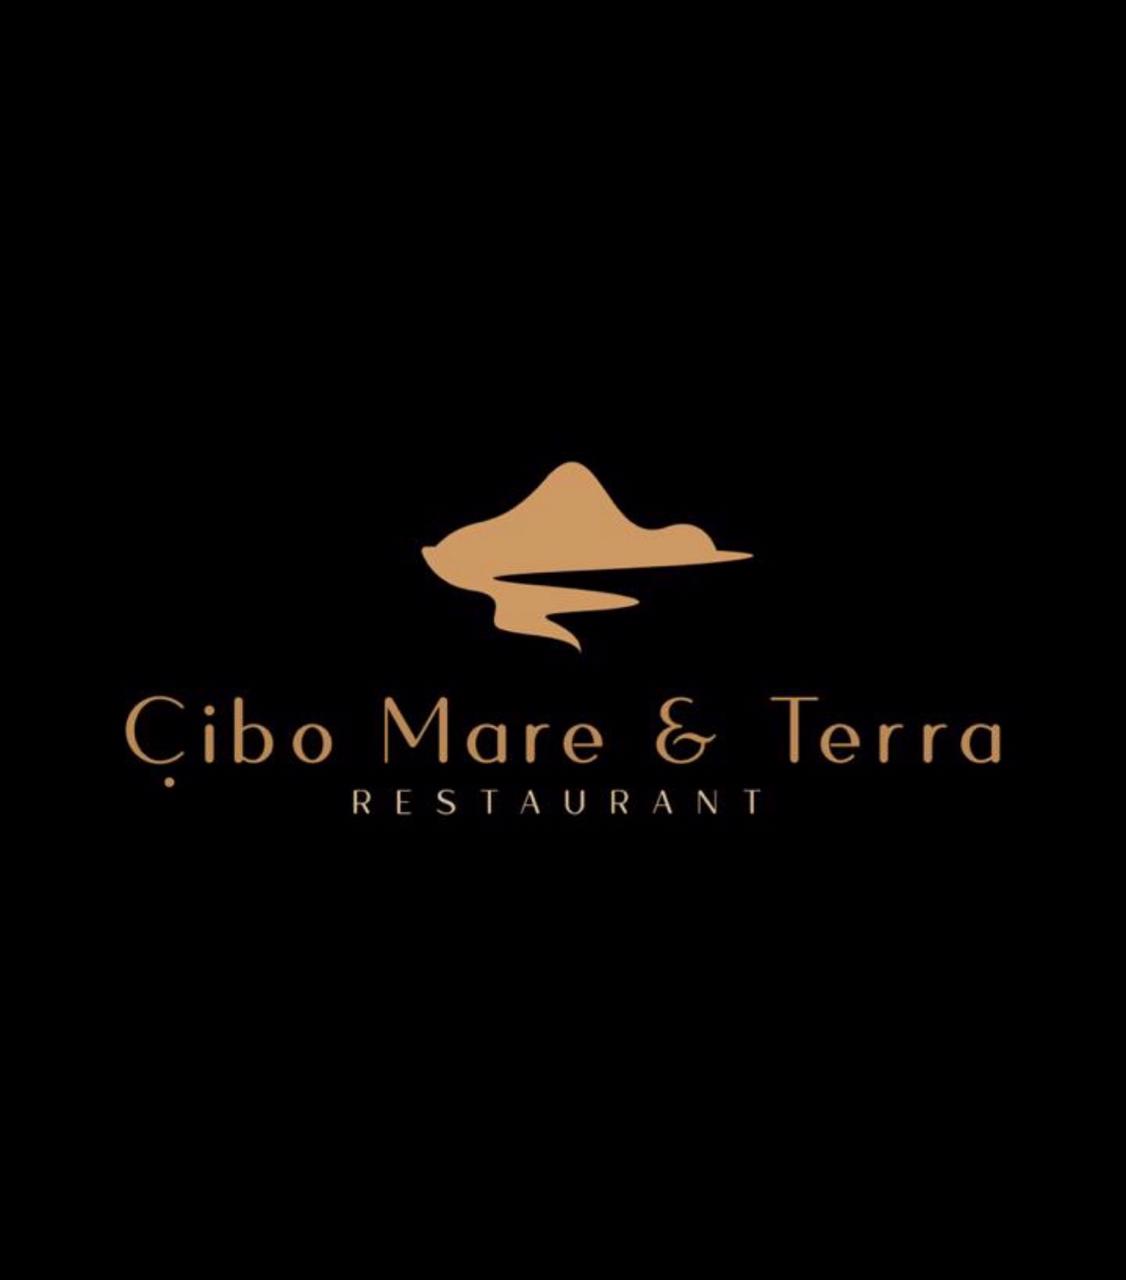 •Cibo Mare E Terra Restaurant kerkon kamarier me eksperience pune per sezonin veror.